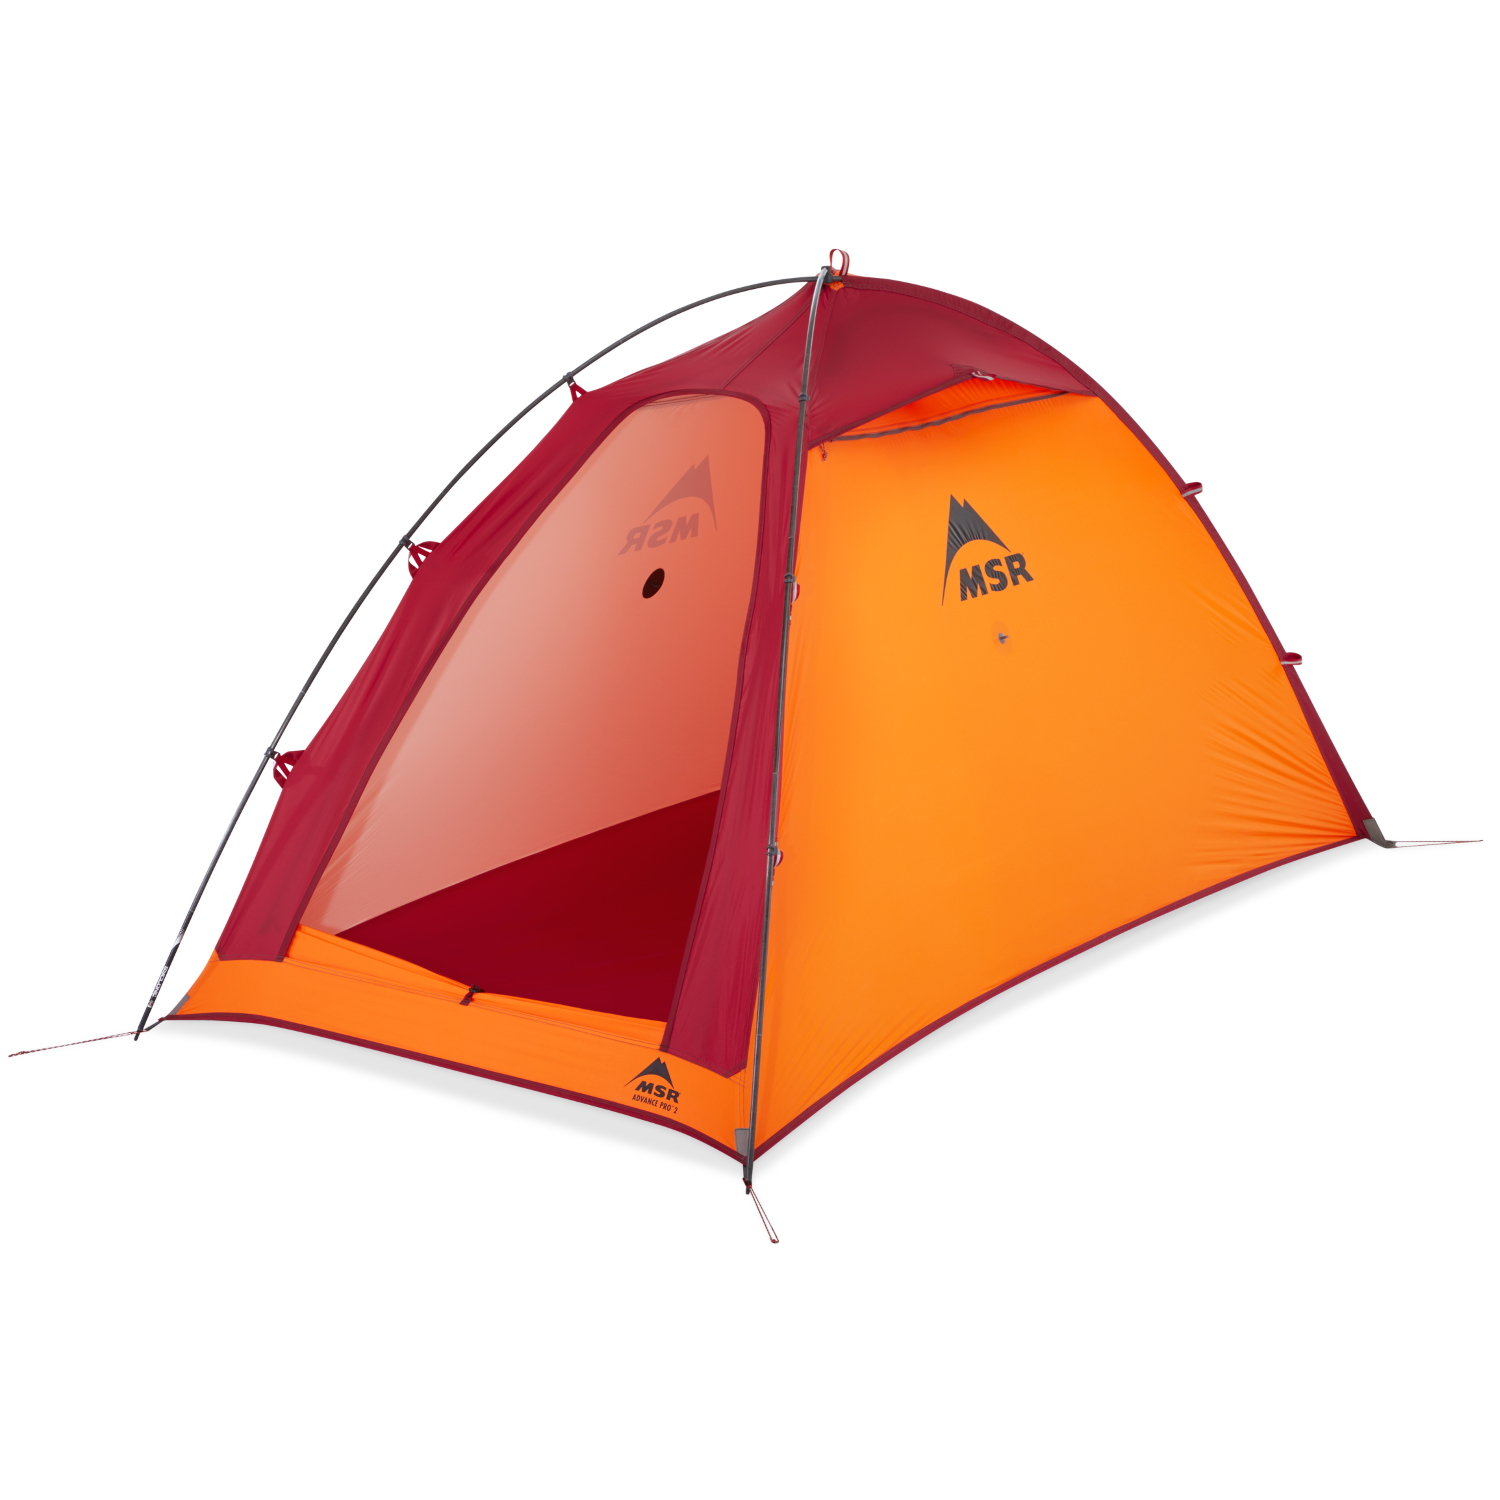 Productfoto van MSR Advance Pro 2 Tent - oranje